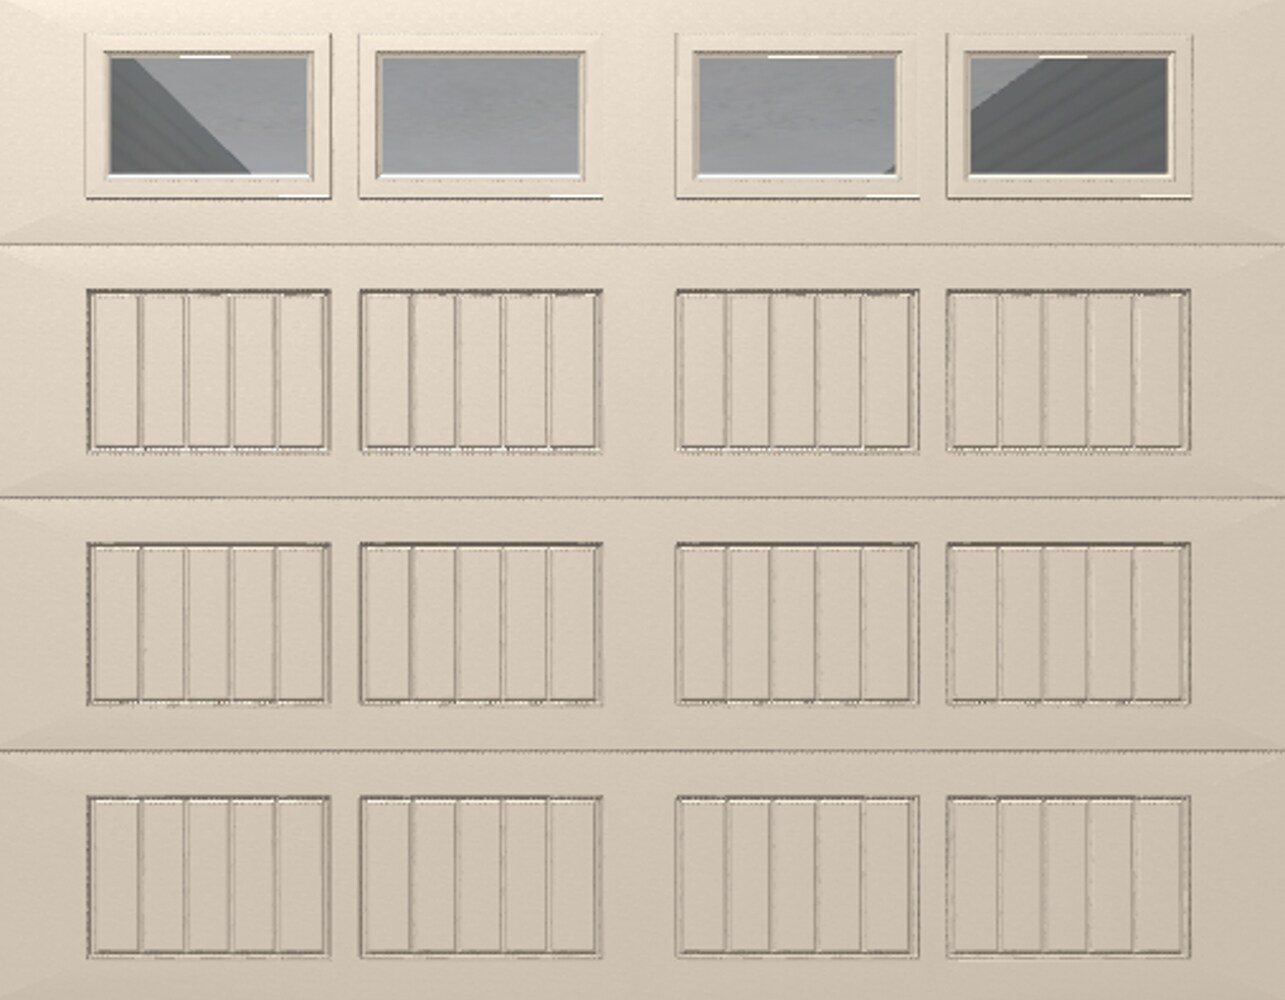 Classic Steel Model 8000 9-ft x 7-ft Almond Single Garage Door with Windows in Off-White | - Wayne Dalton WD8000SAC97